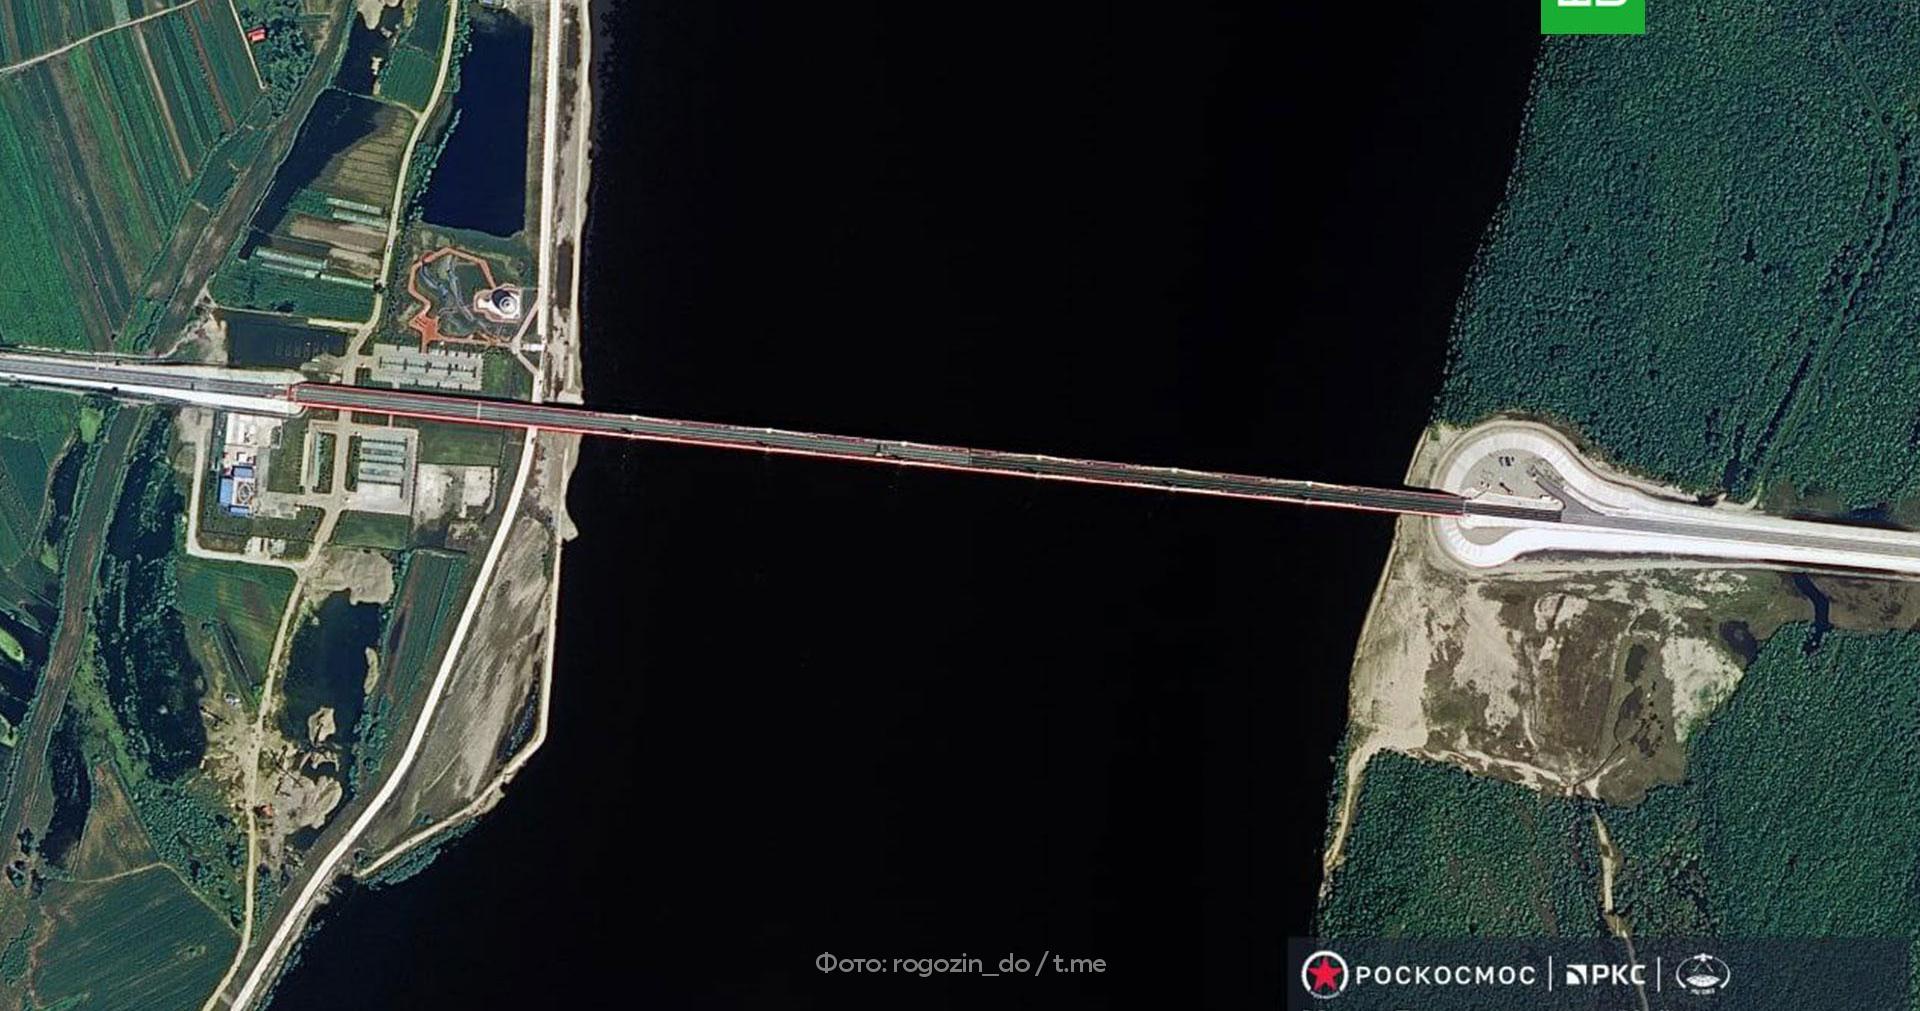 Мост из благовещенска в китай фото